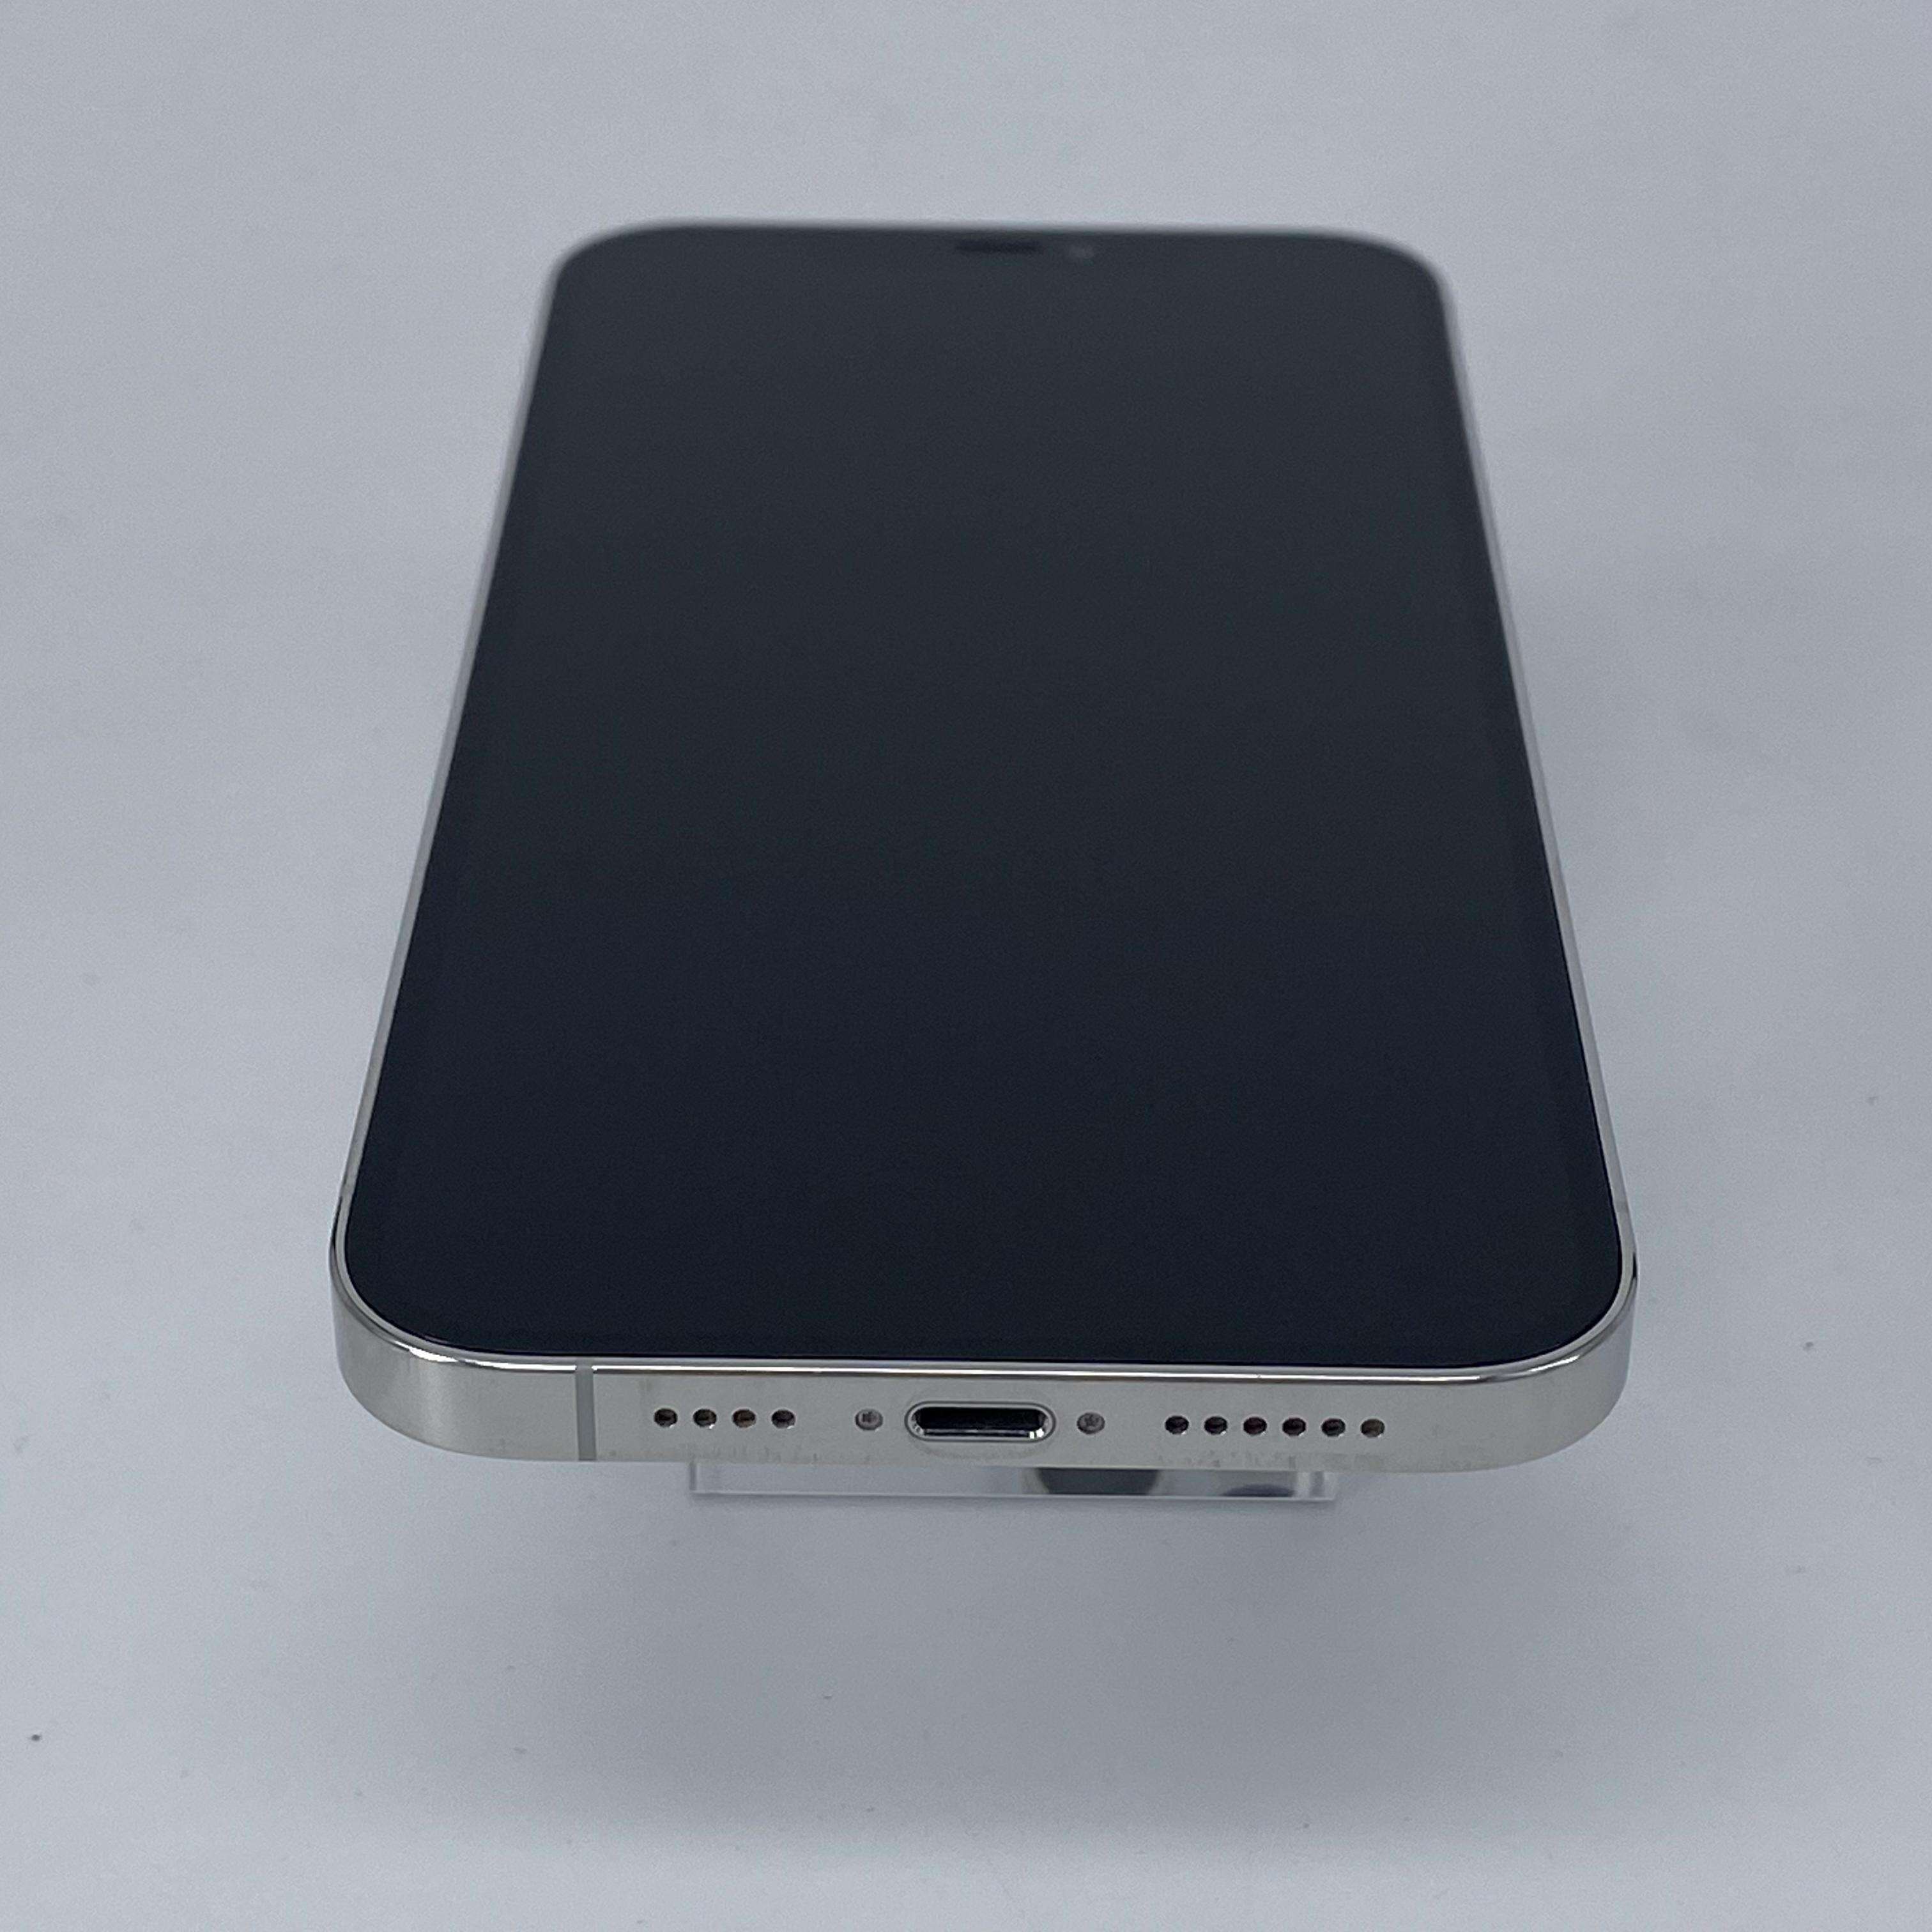 iPhone 12 Pro Max 256G